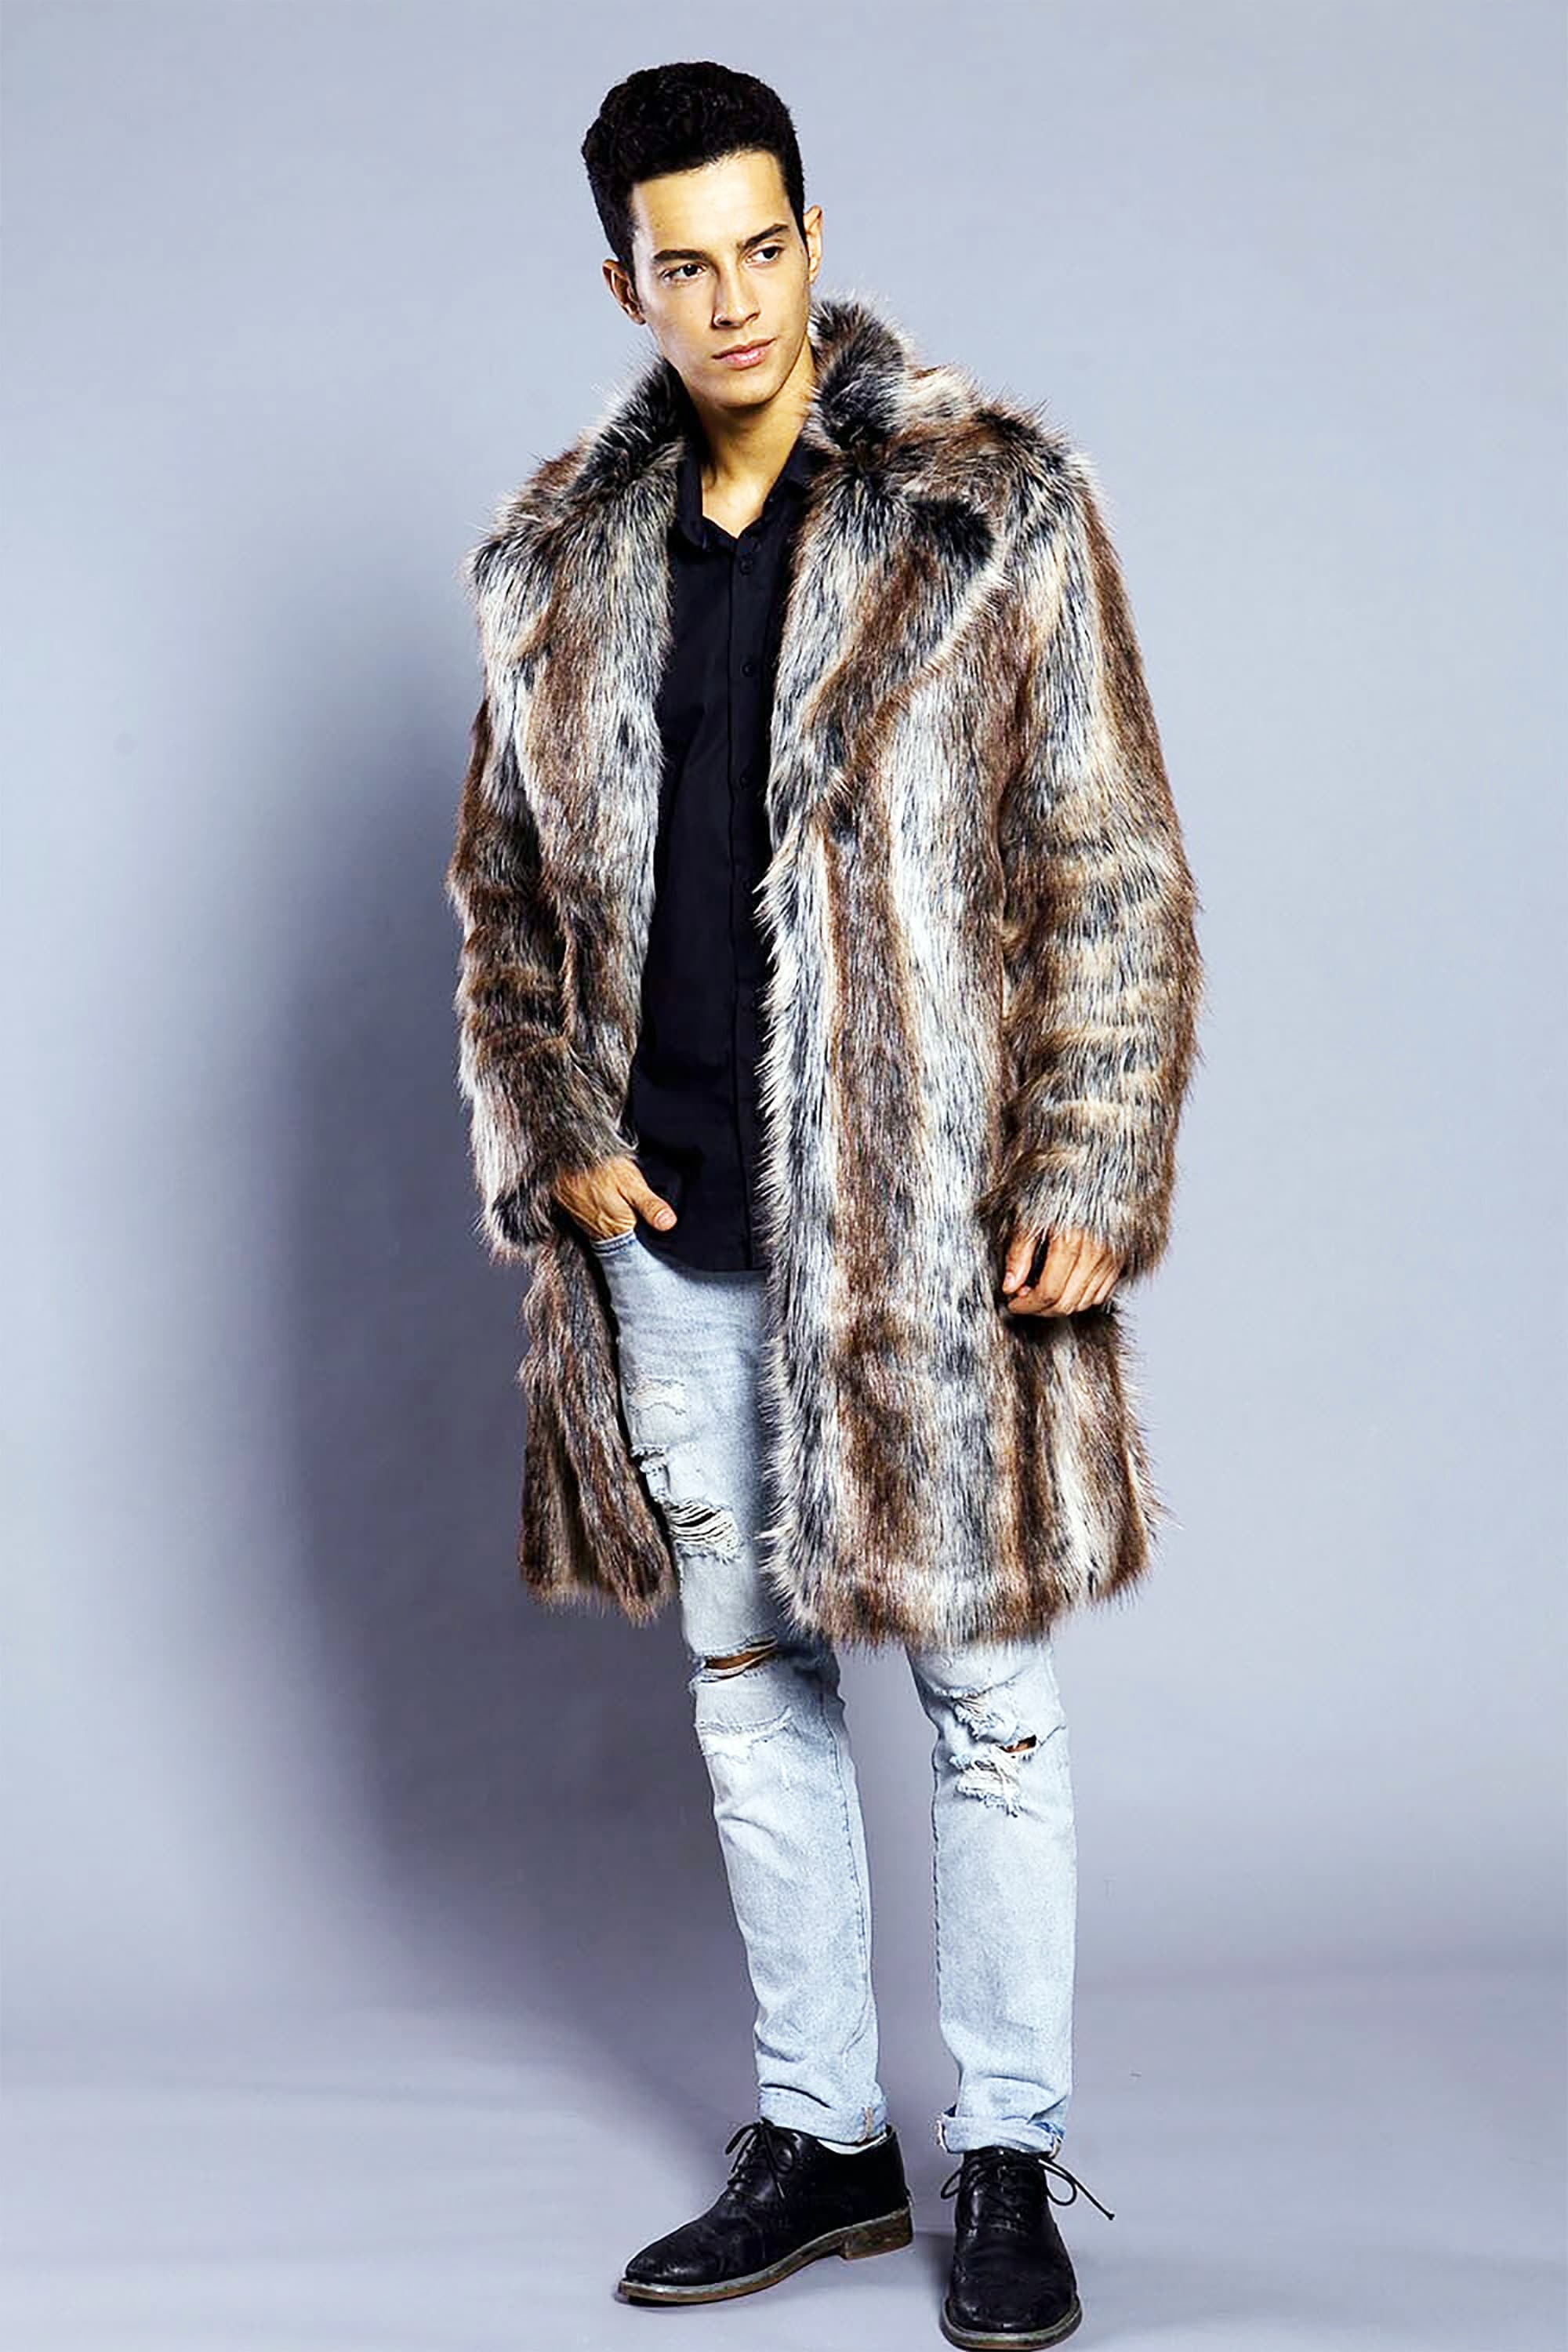 KBKYBUYZ Men's Winter Faux Fox-Fur' Coat Faux Fur Coat Men Turn